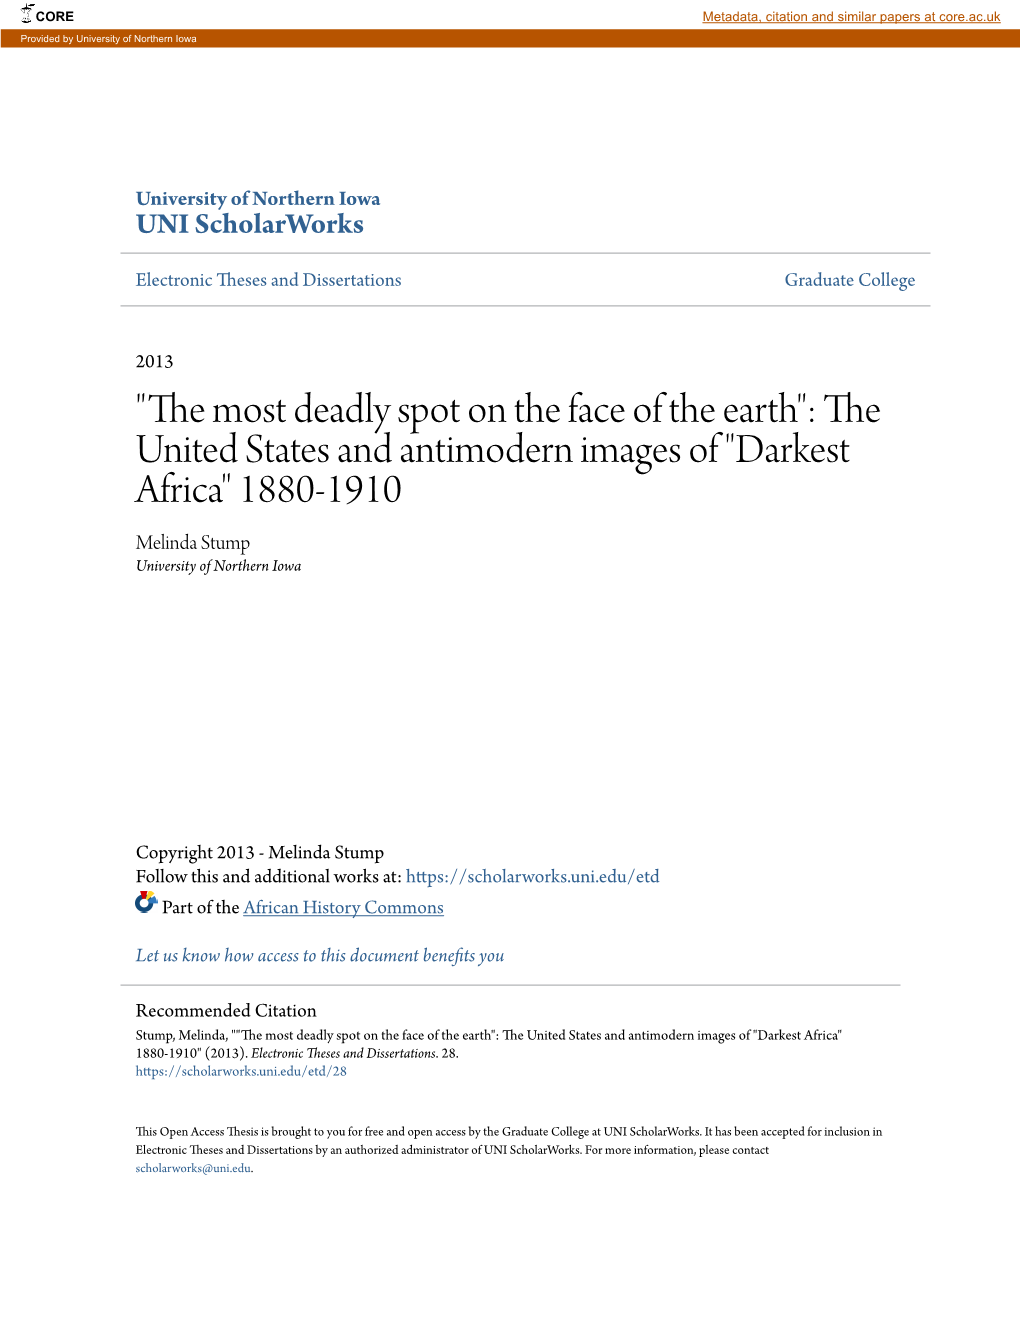 Darkest Africa" 1880-1910 Melinda Stump University of Northern Iowa